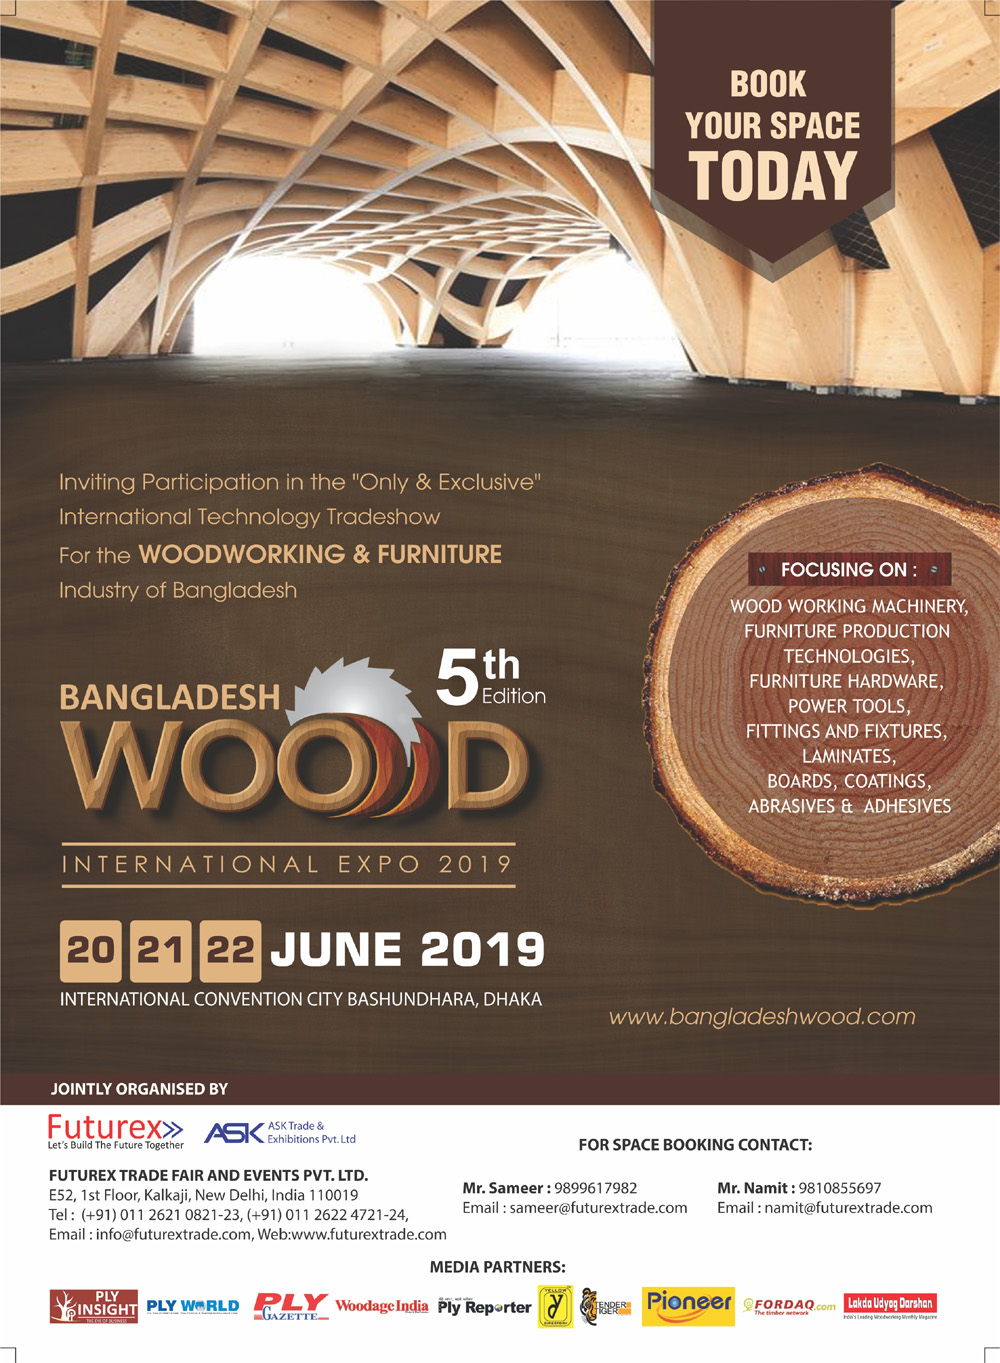 Bangladesh Wood